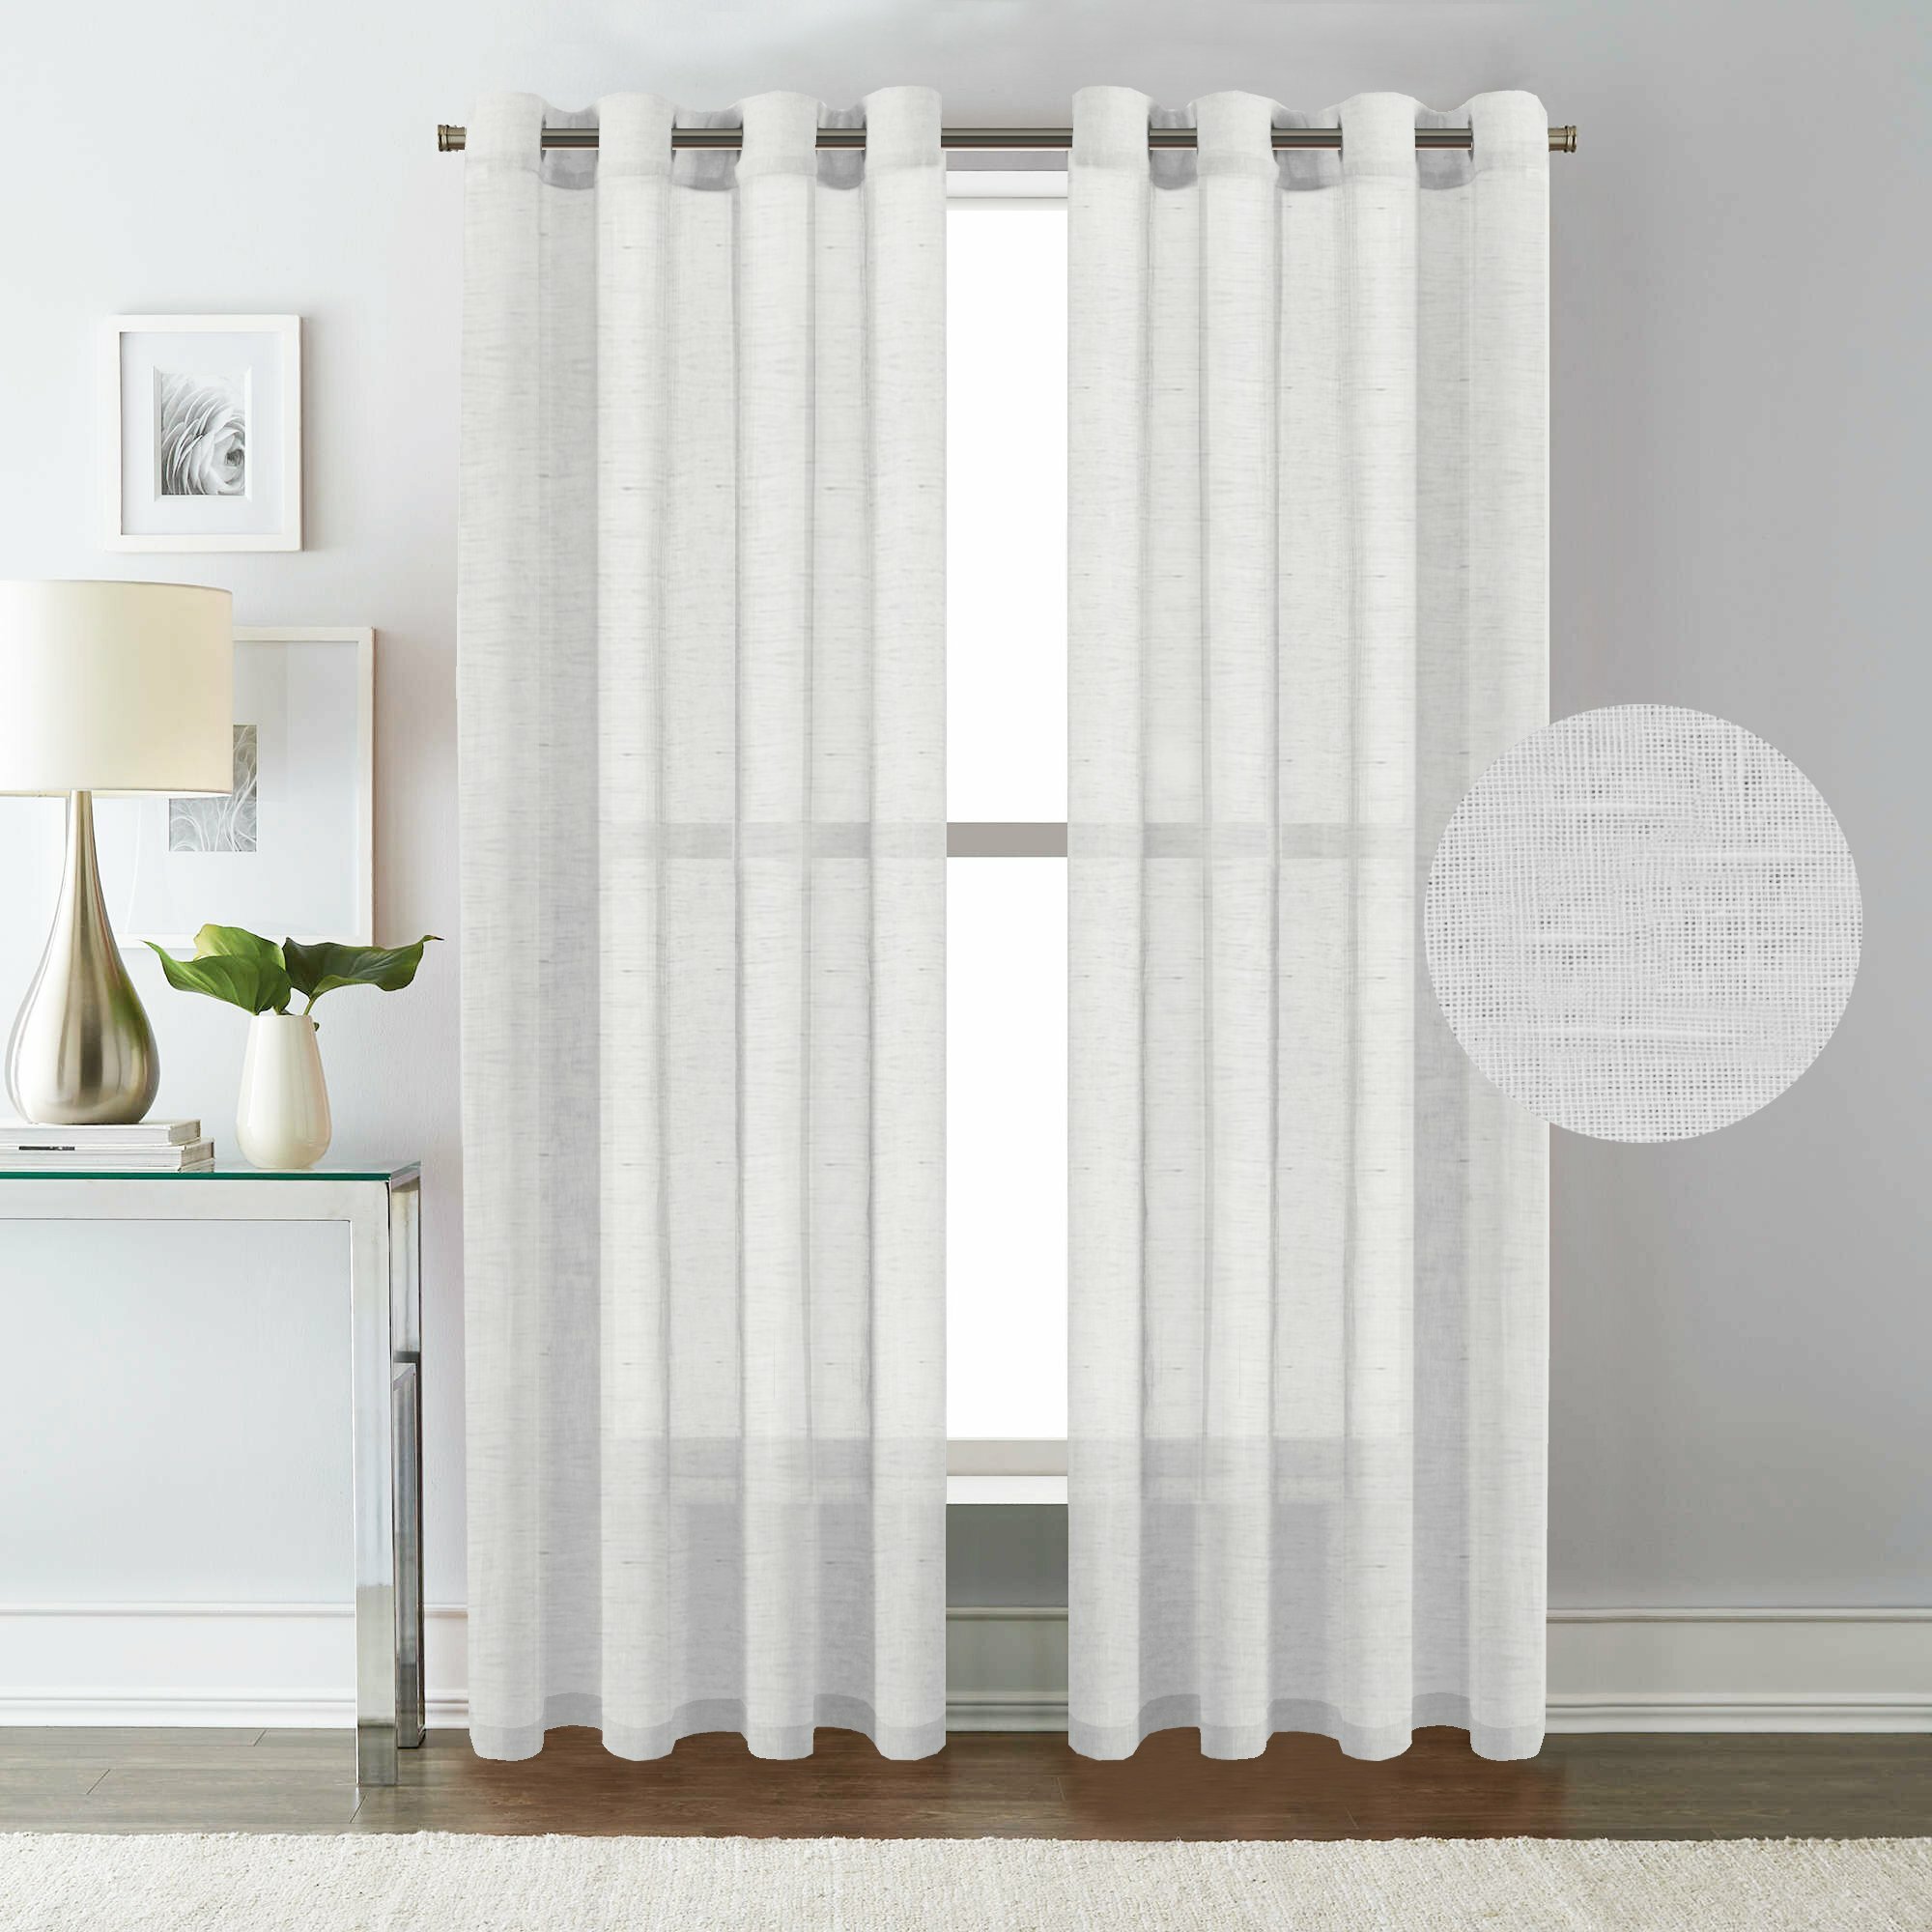 Angeline Breathable Mixed Linen Sheers Nickel Grommet Curtain Panels